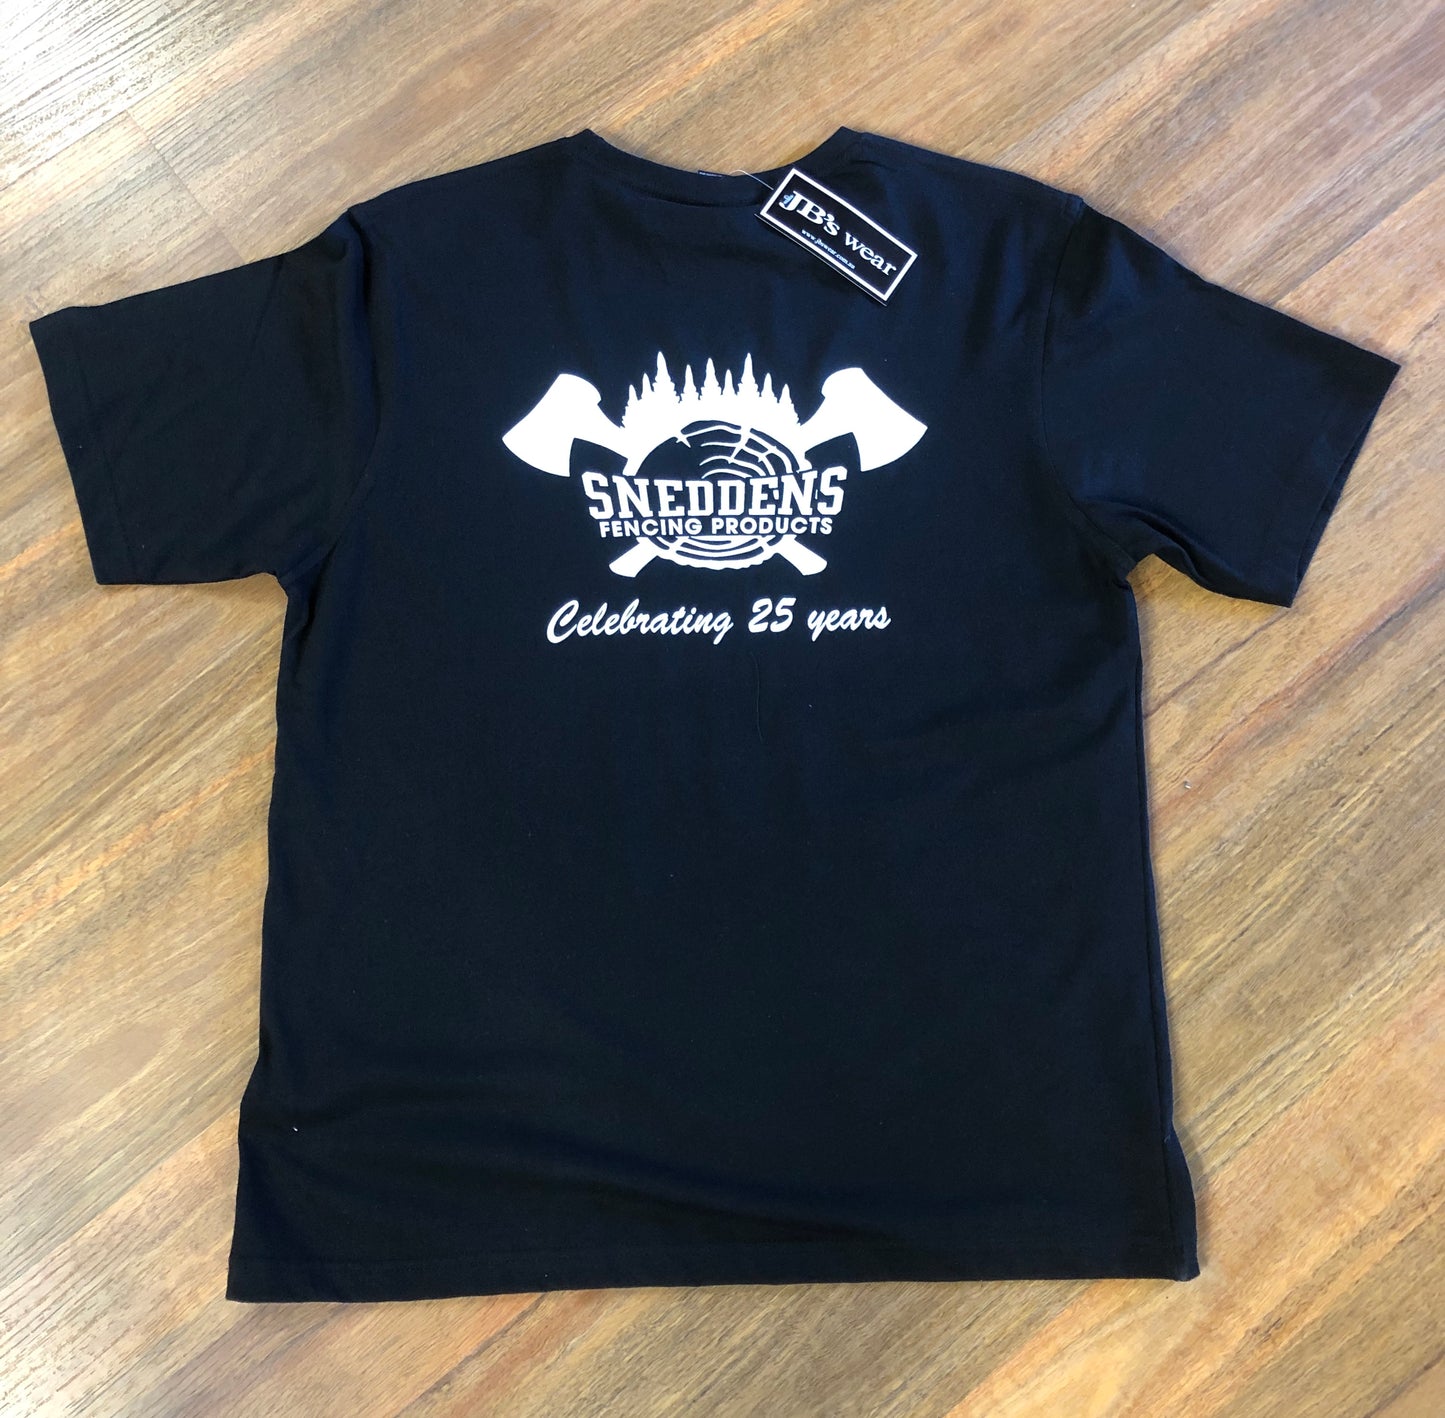 Snedden’s Fencing Products T Shirt Established 1994 Black ===DISCOUNT CODE===